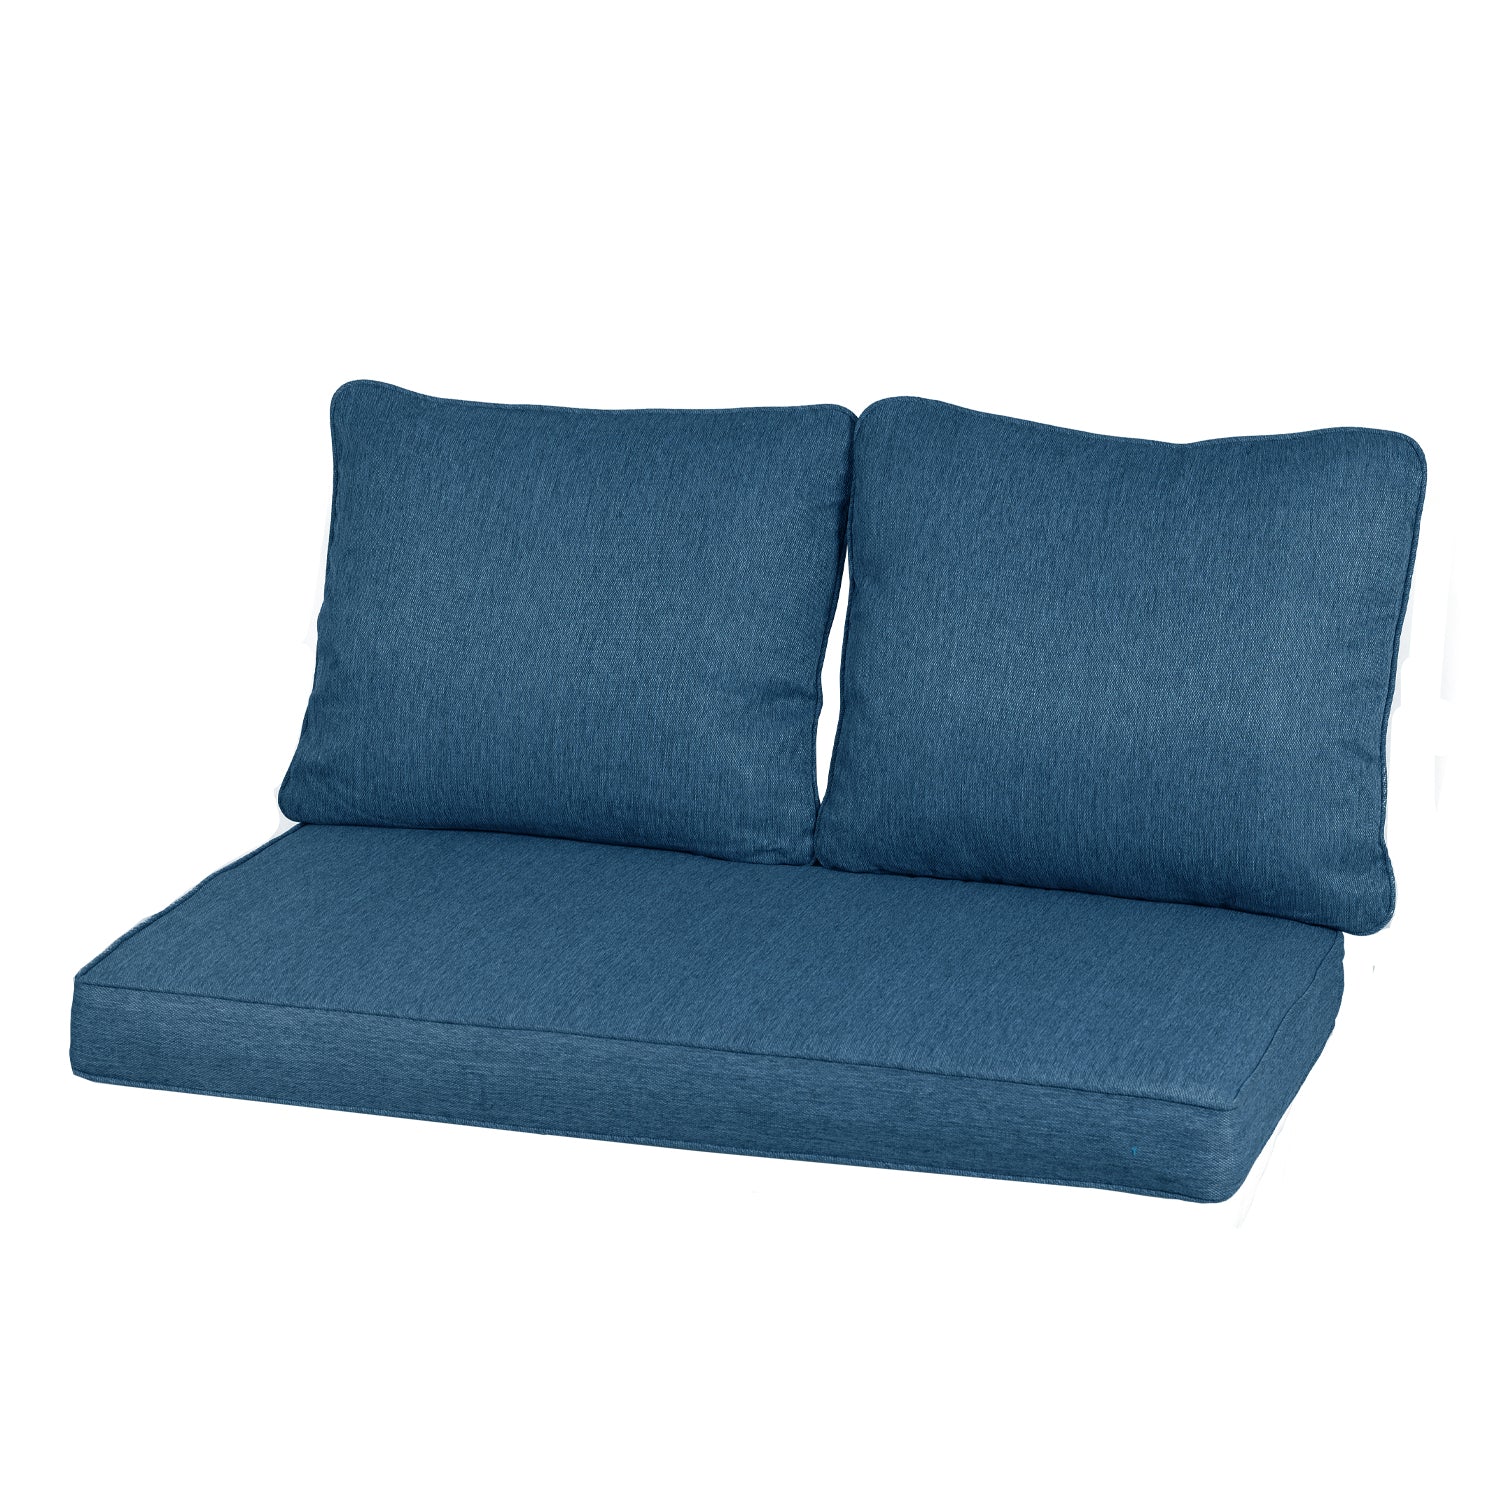 Loveseat Cushions Set 46.5x24.4x3.9 Deep Seating Bench Chair